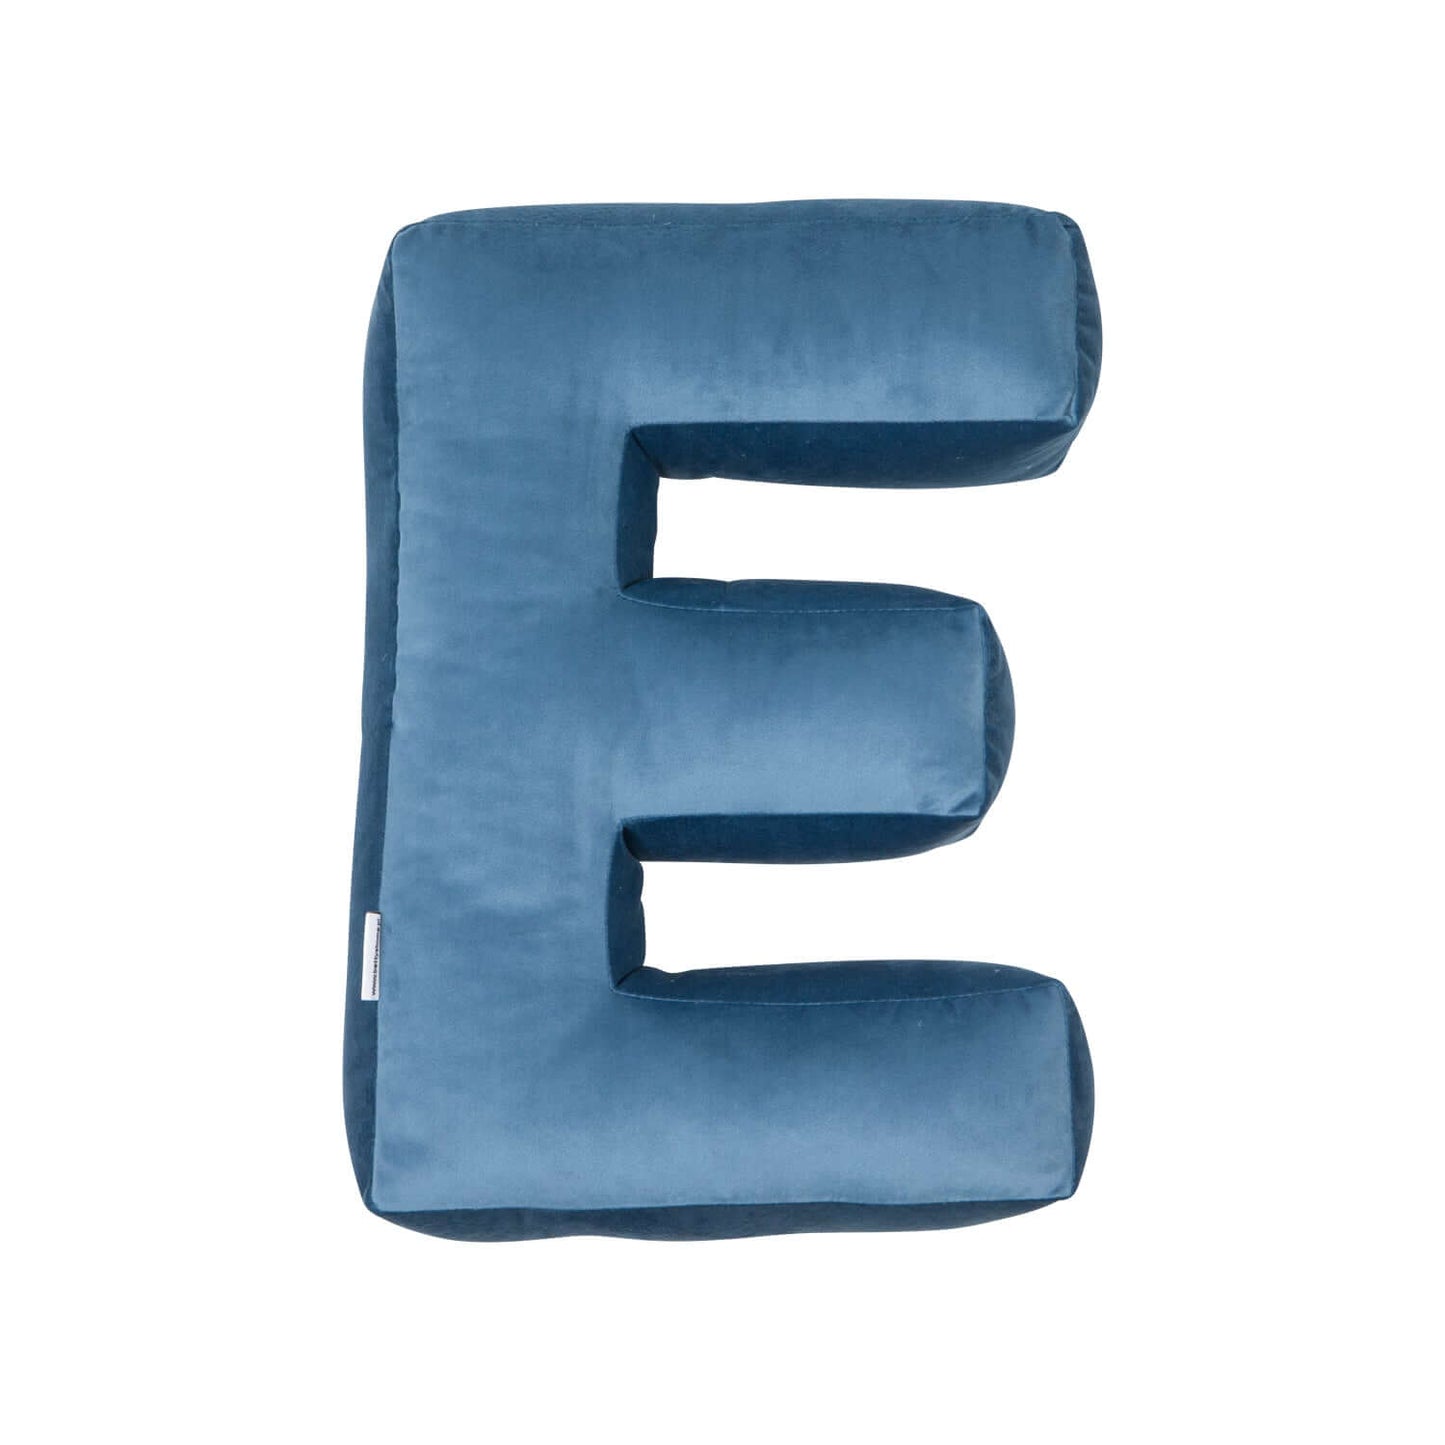 Poduszka literka welurowa E niebieska od Bettys Home przód 